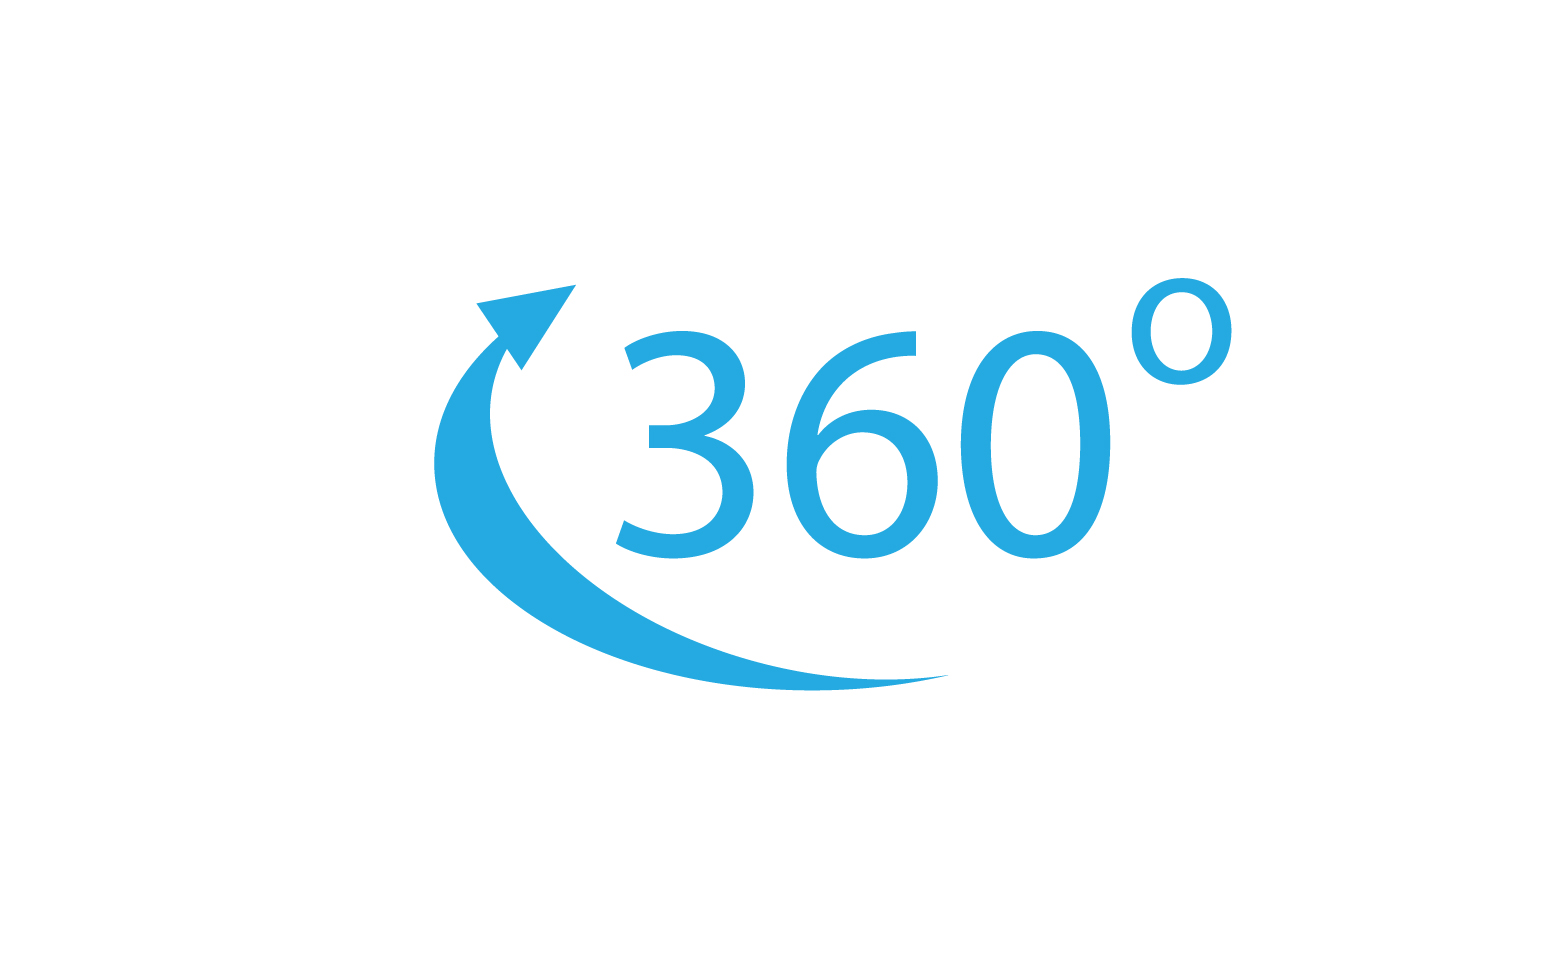 360 degree angle rotation icon symbol logo version v64